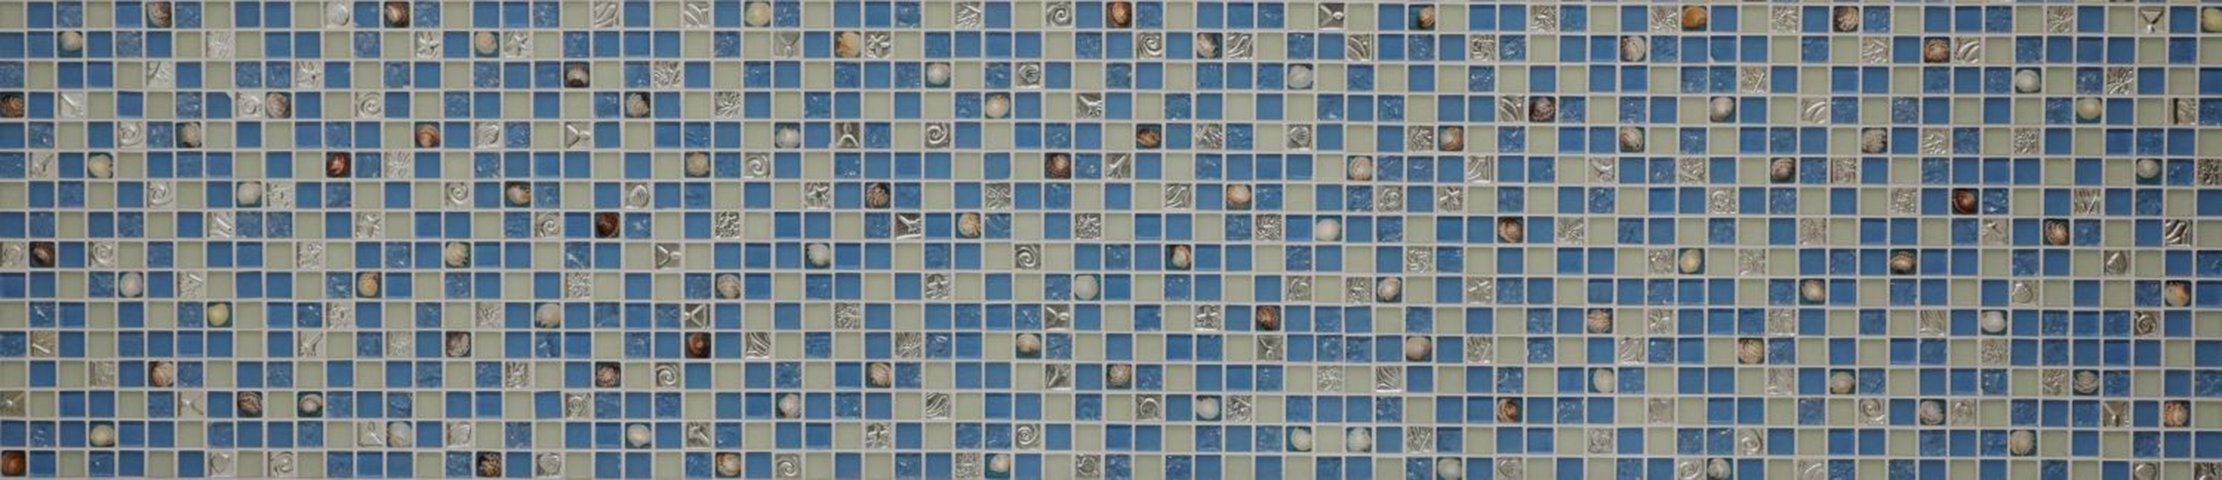 / Mosani Matten glänzend blau 10 Mosaikfliesen Crystal Glasmosaik Mosaikfliesen